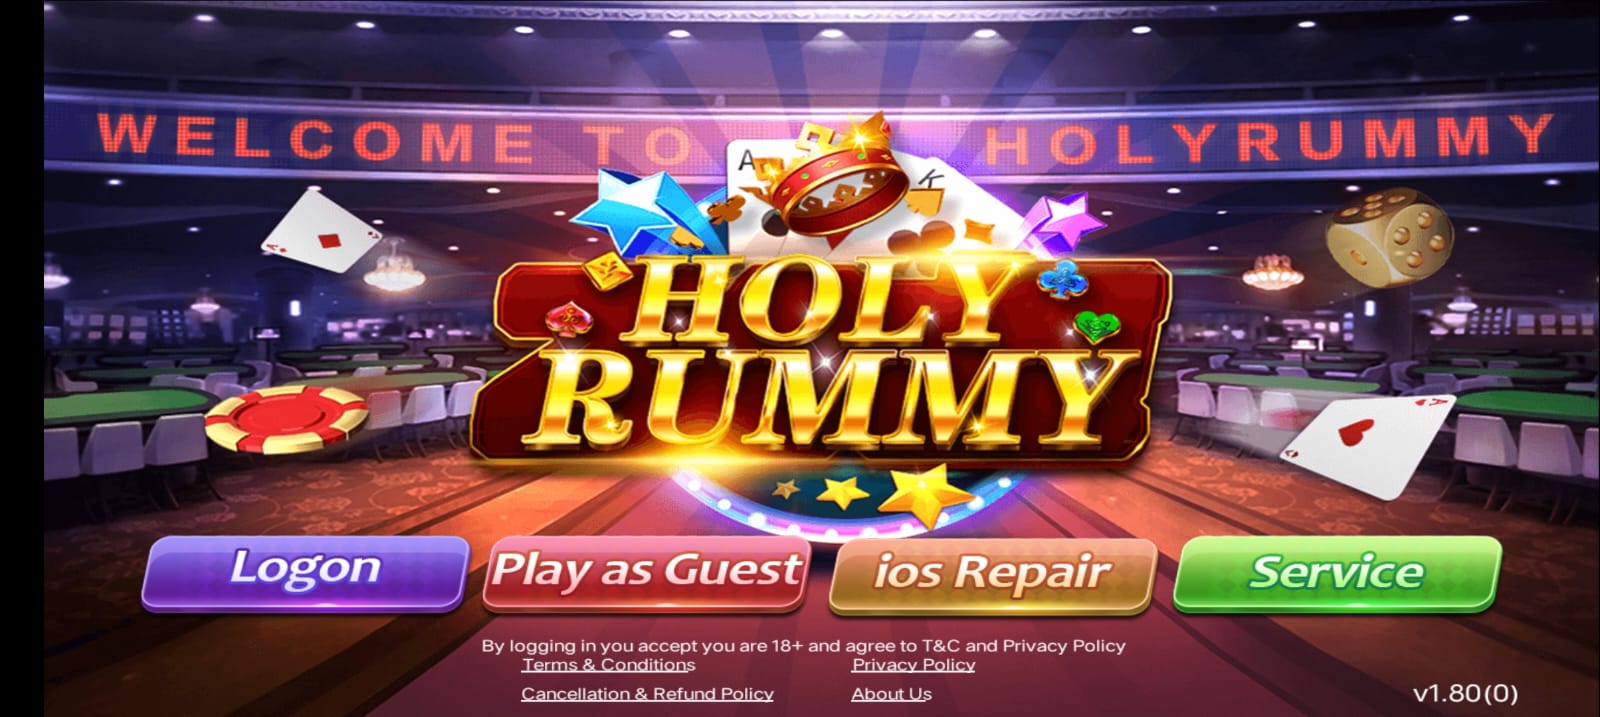 Holy Rummy App